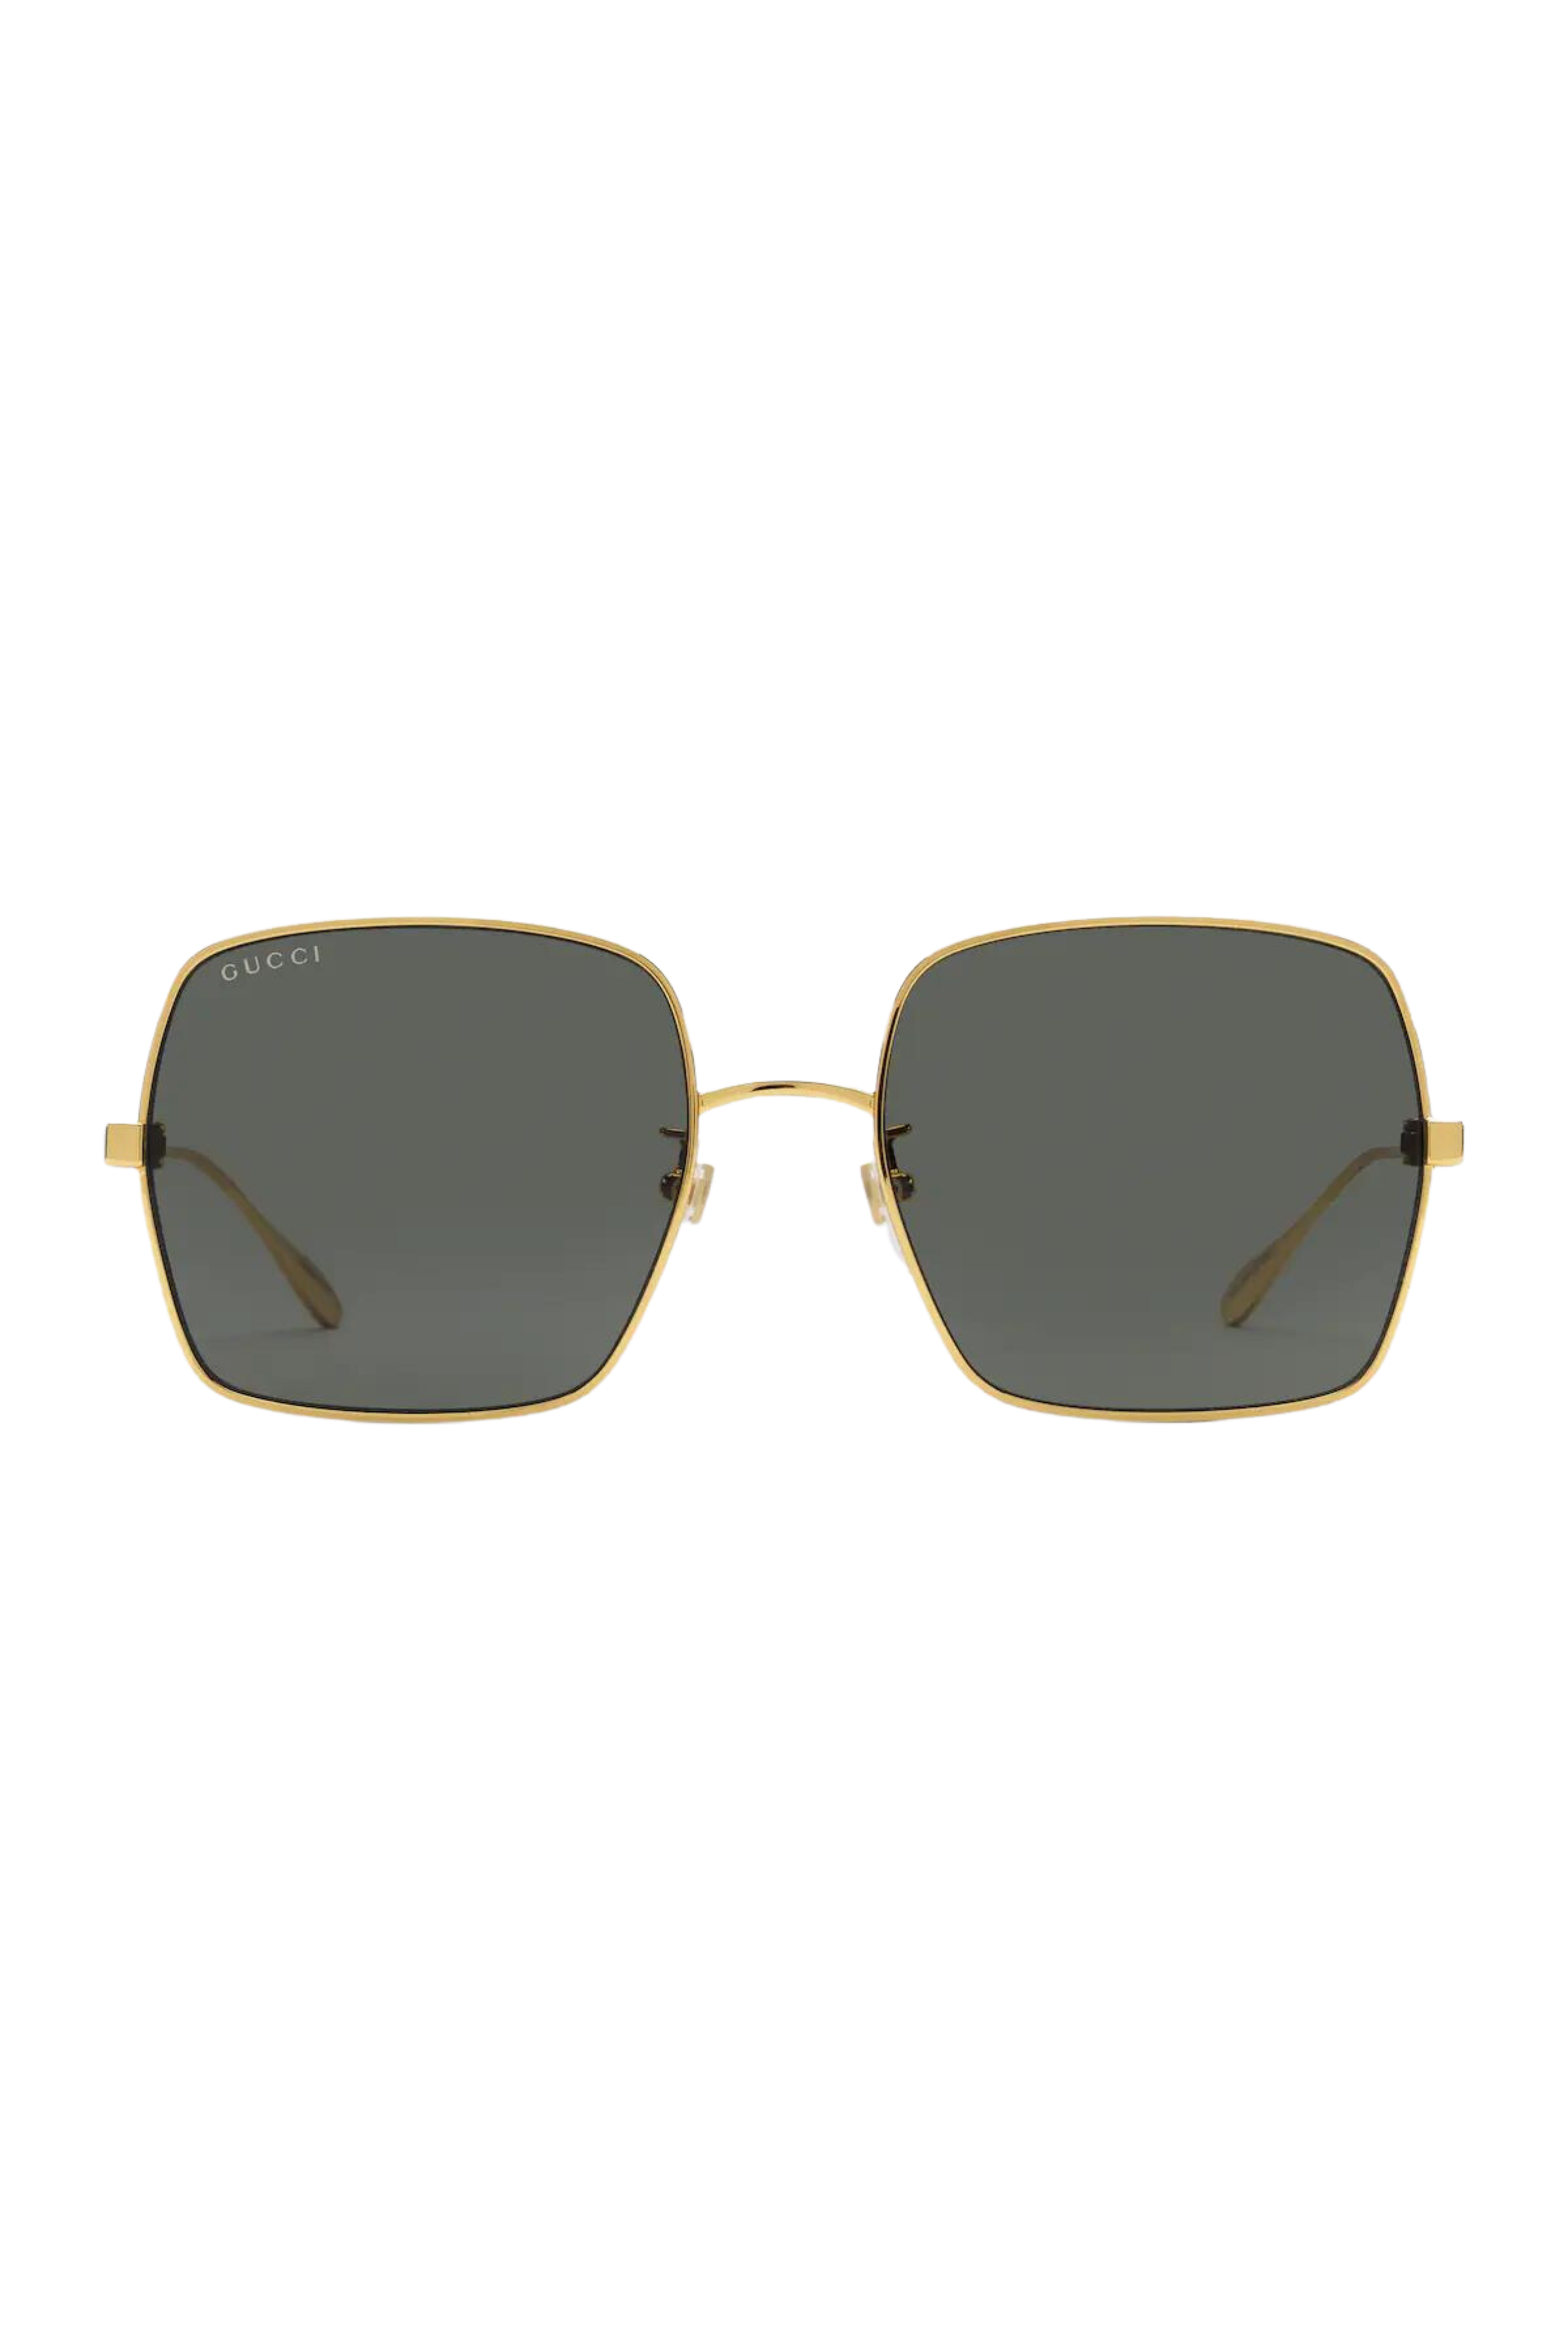 Gucci Metal Square Frame Sunglasses